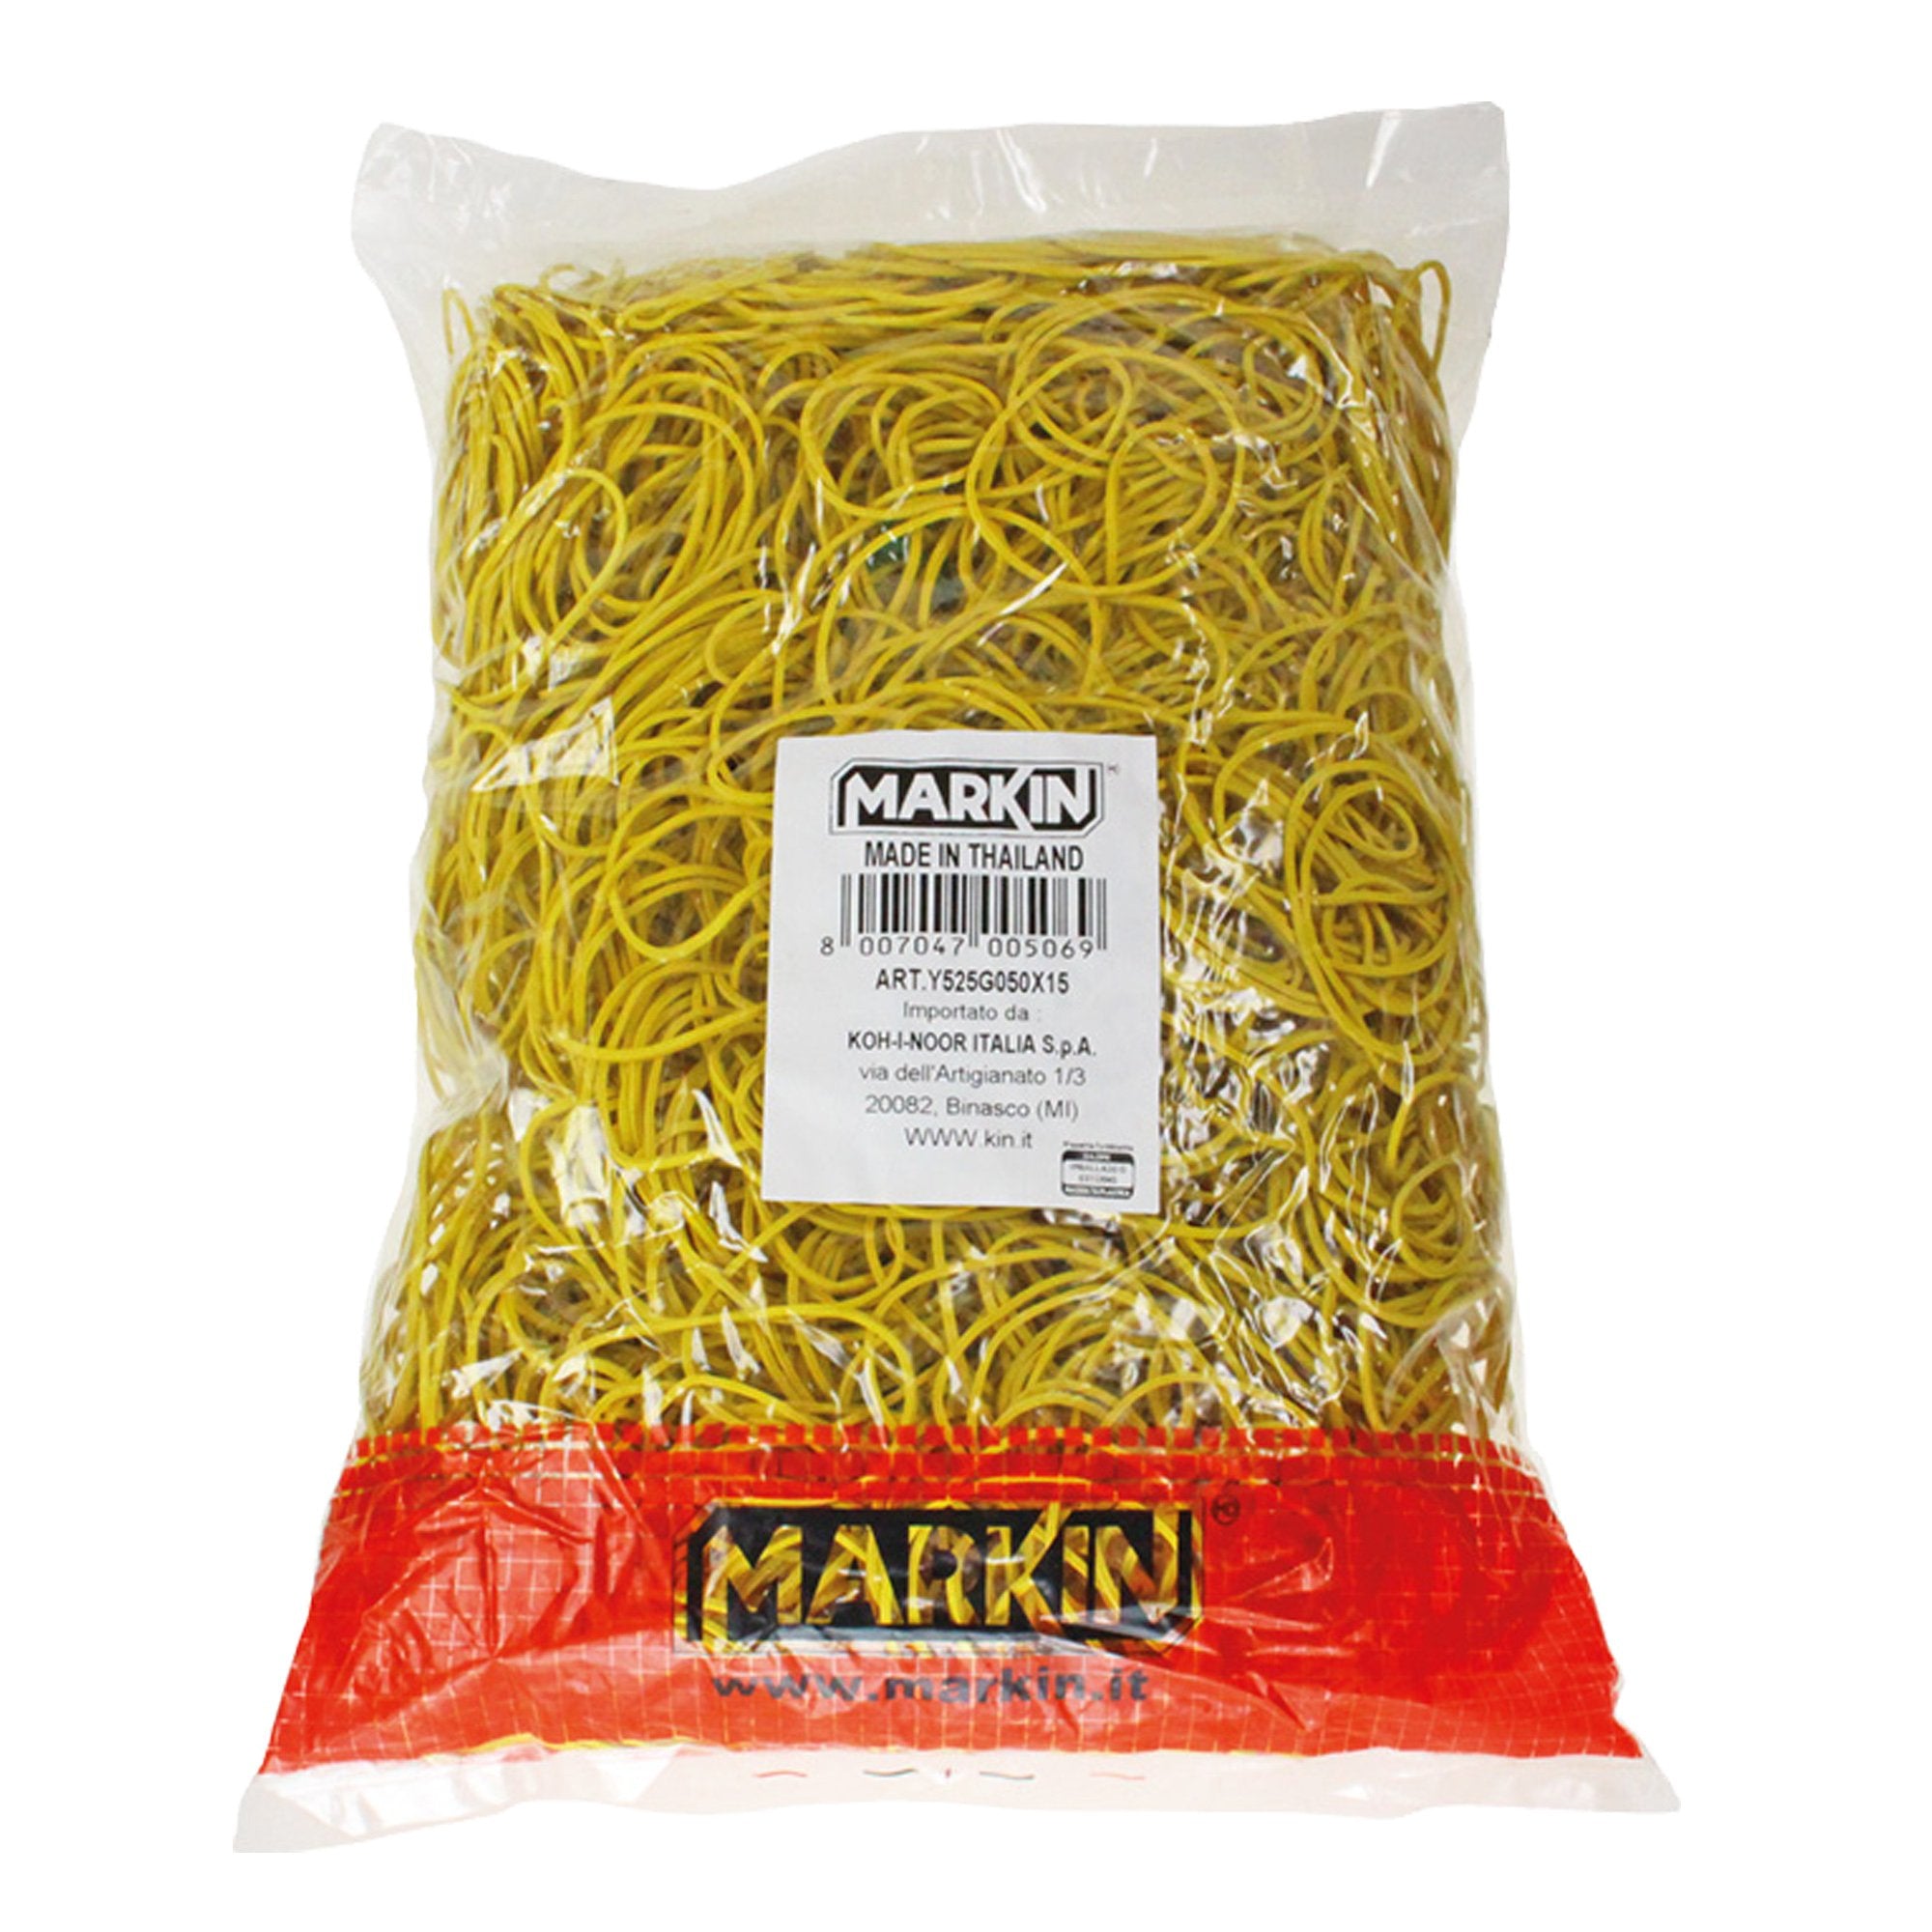 markin-elastico-gomma-giallo-d100-sacco-1kg